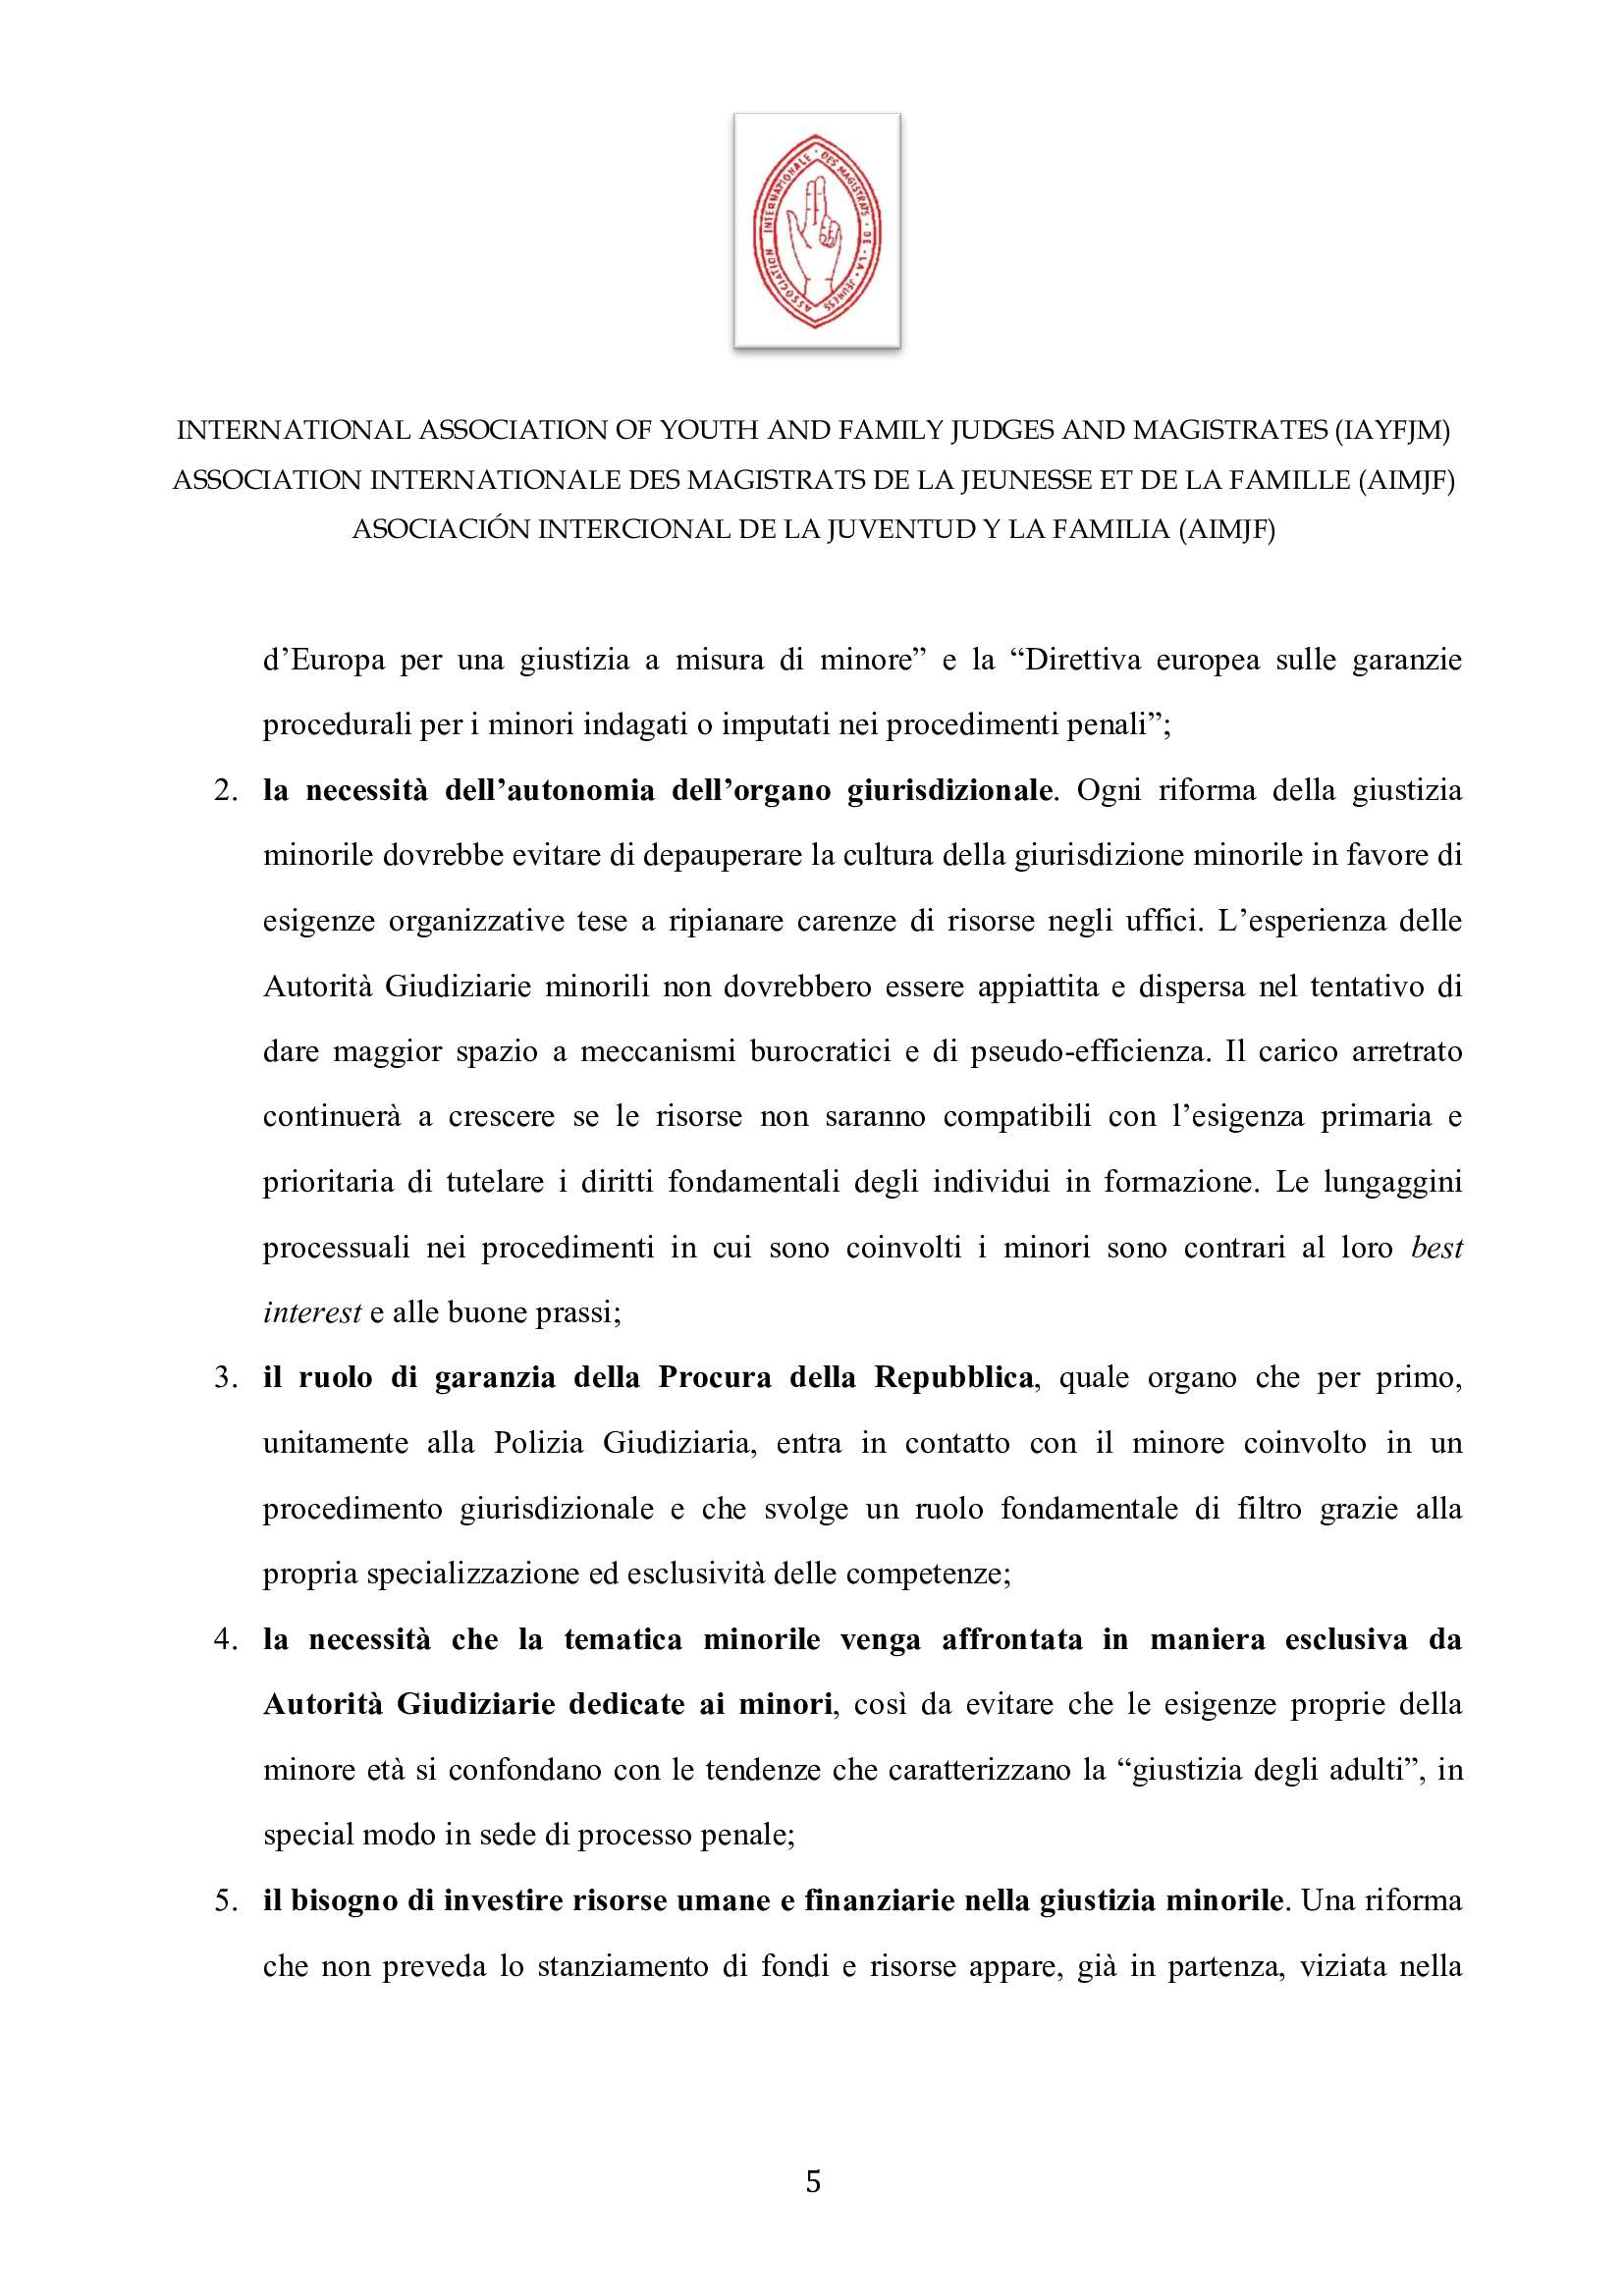 IAYFJM Statement on the Italian Juvenile Justice R 004